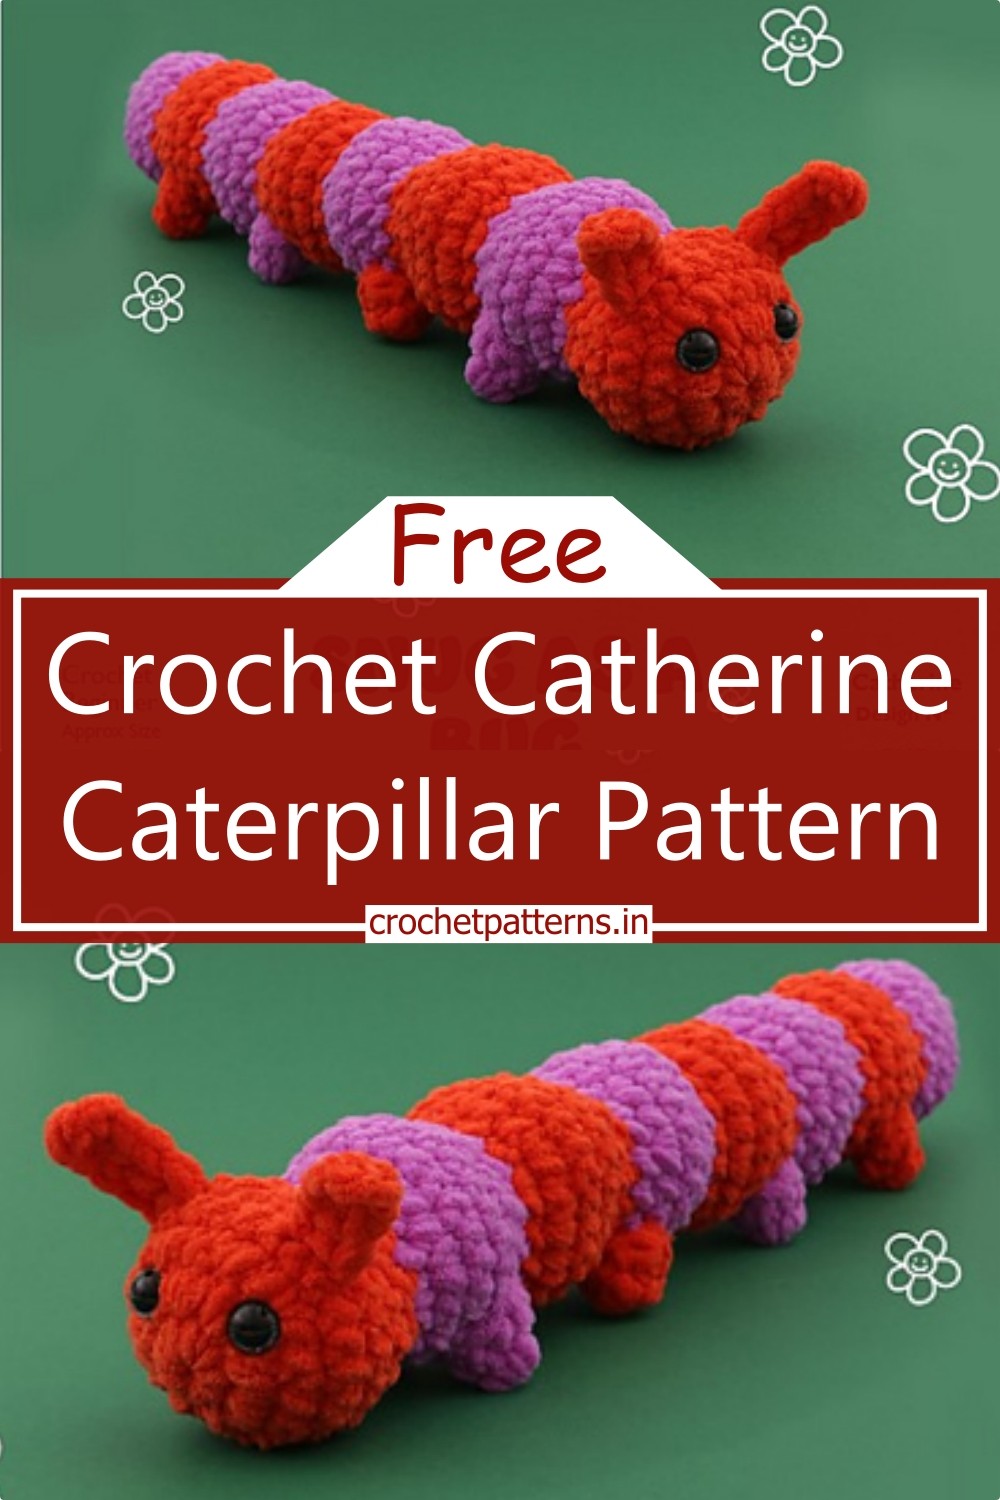 Crochet Catherine Caterpillar Pattern